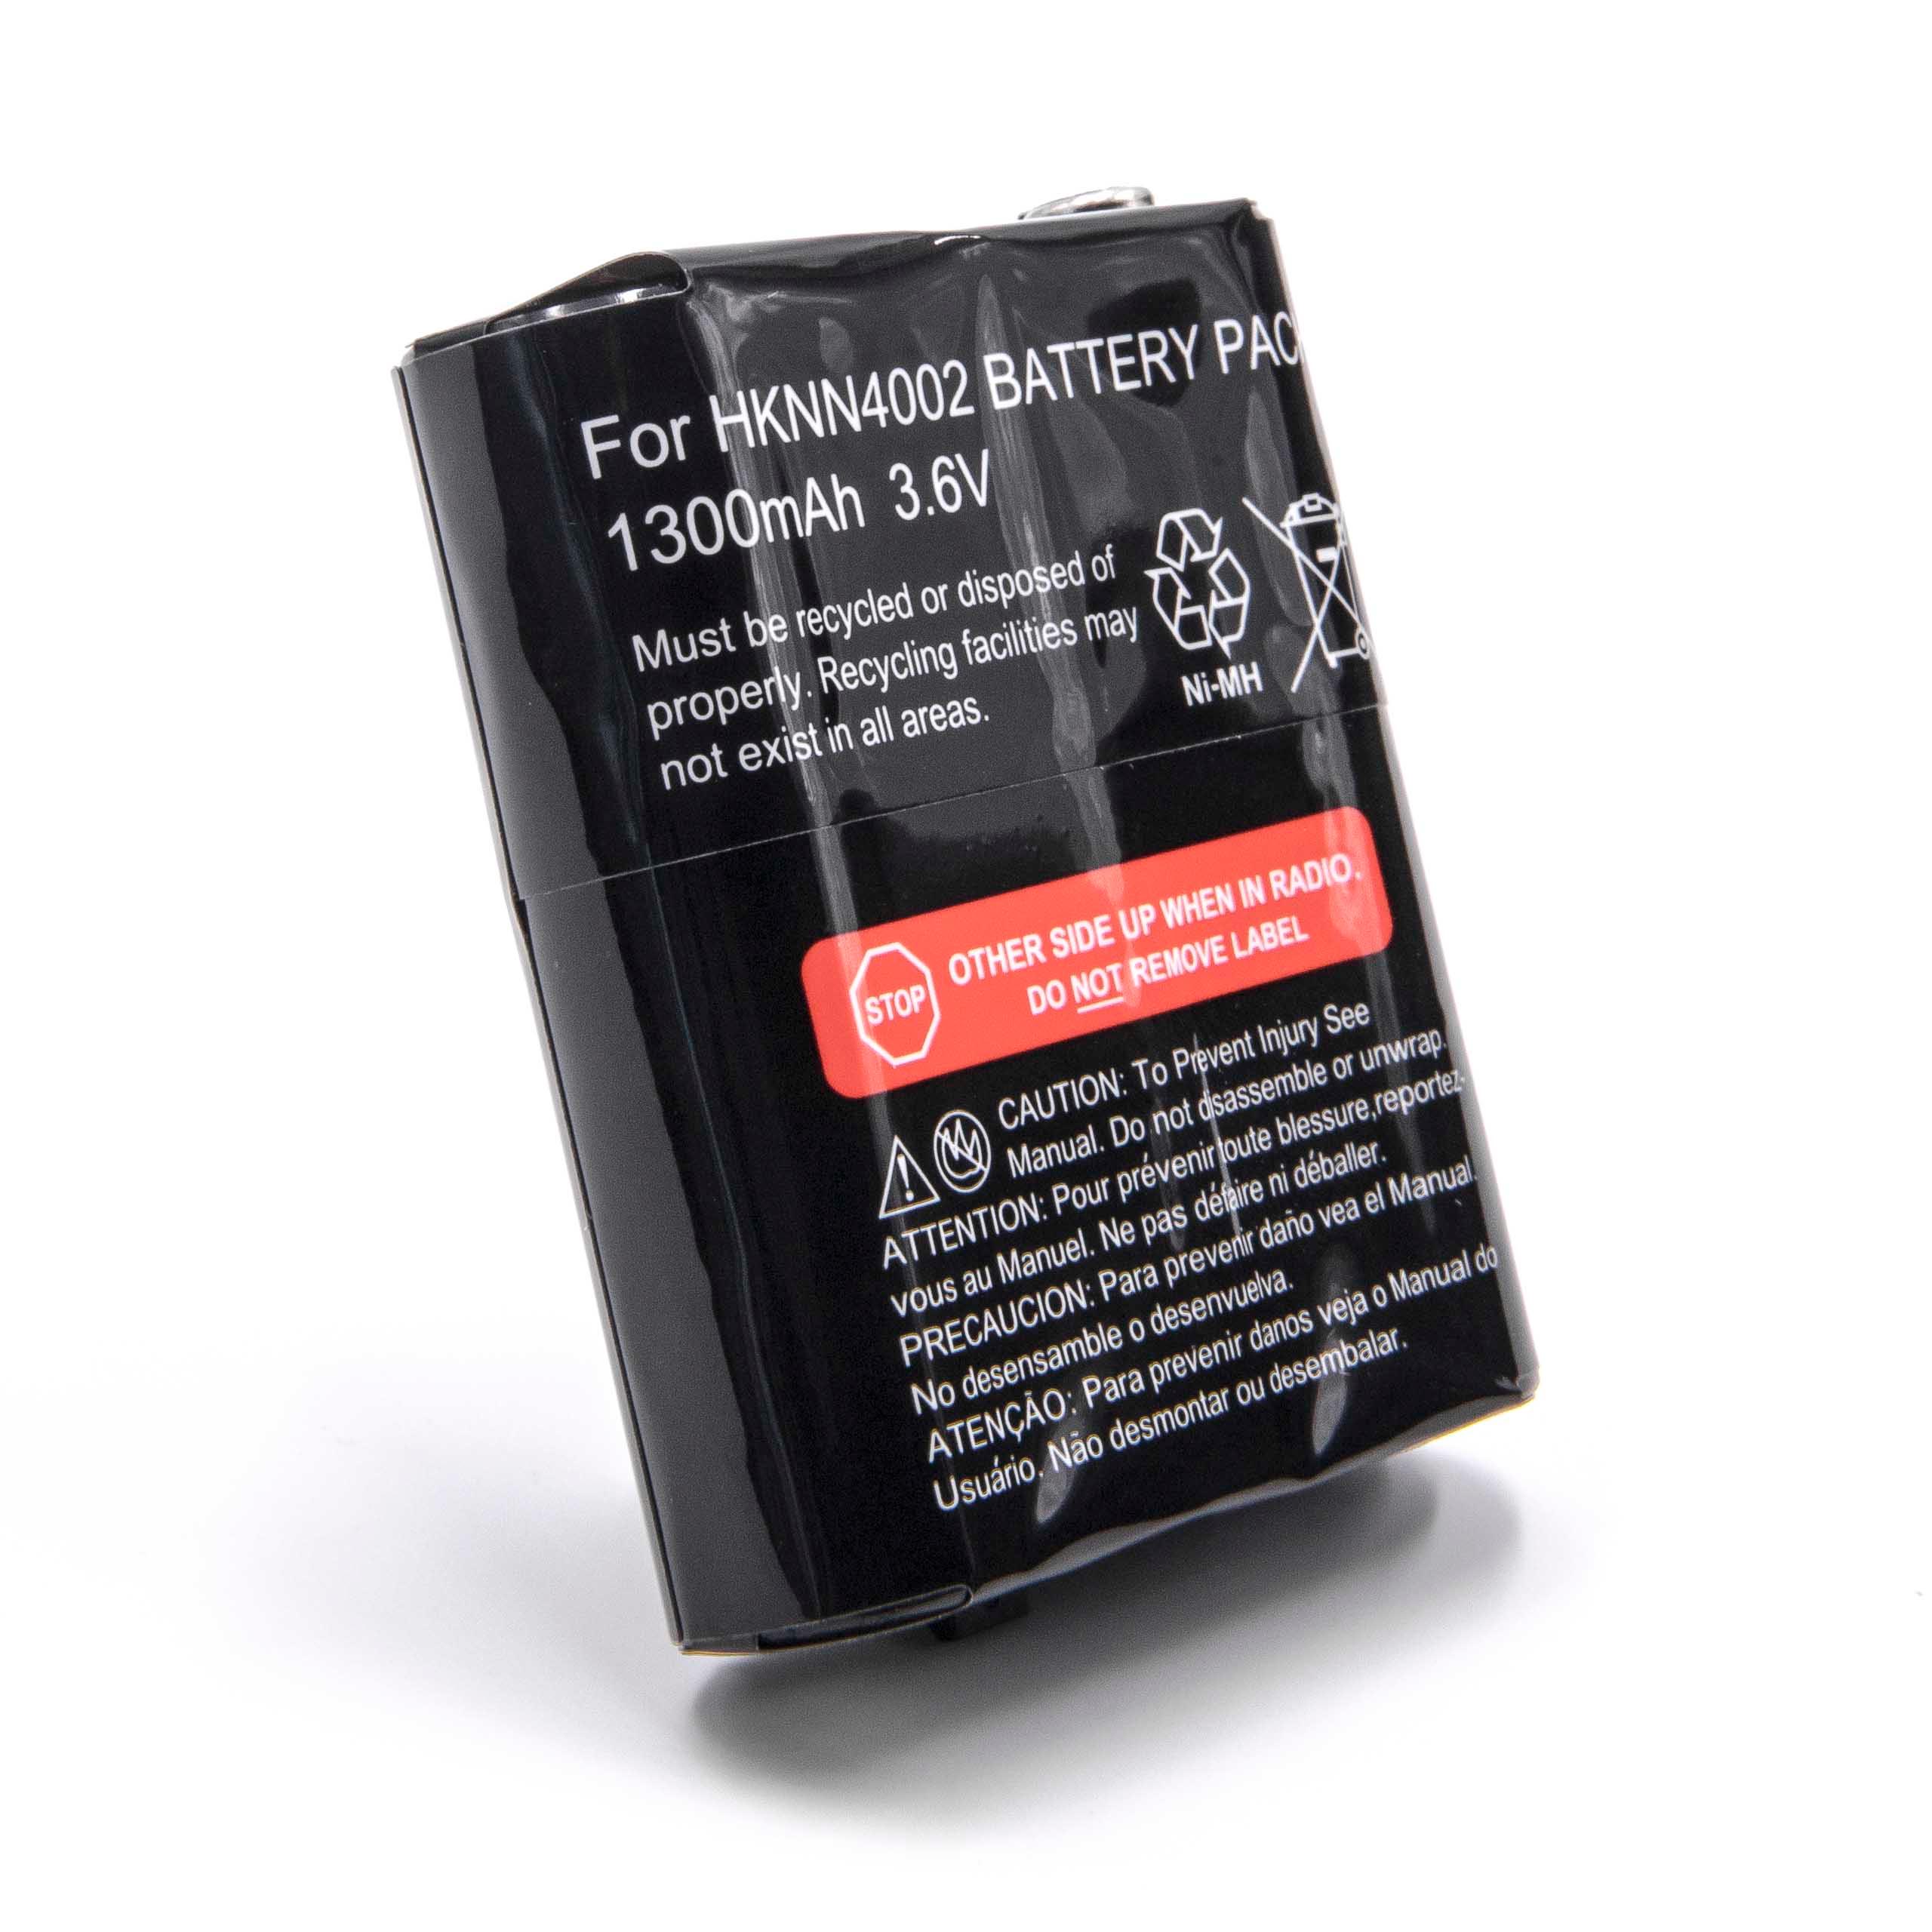 Batterie remplace Motorola FRS-4002A, HKNN4002A, 56315, 4002A pour radio talkie-walkie - 1300mAh 3,6V NiMH